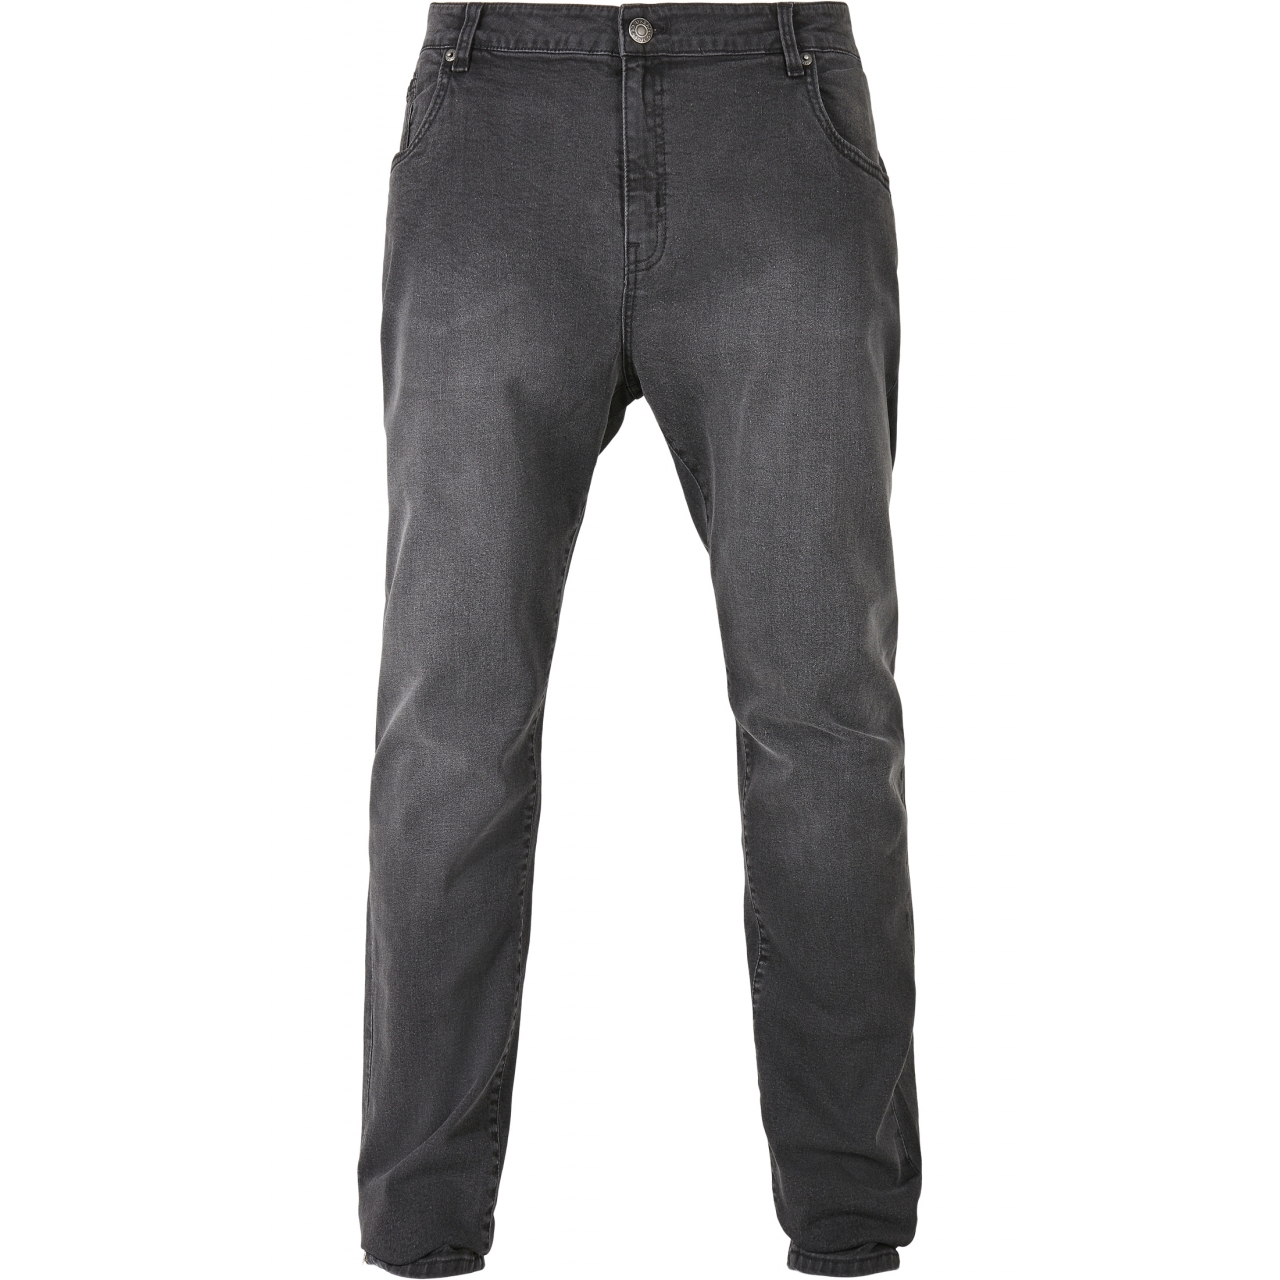 Džíny Urban Classics Slim Fit Zip Jeans - černé, 28/32